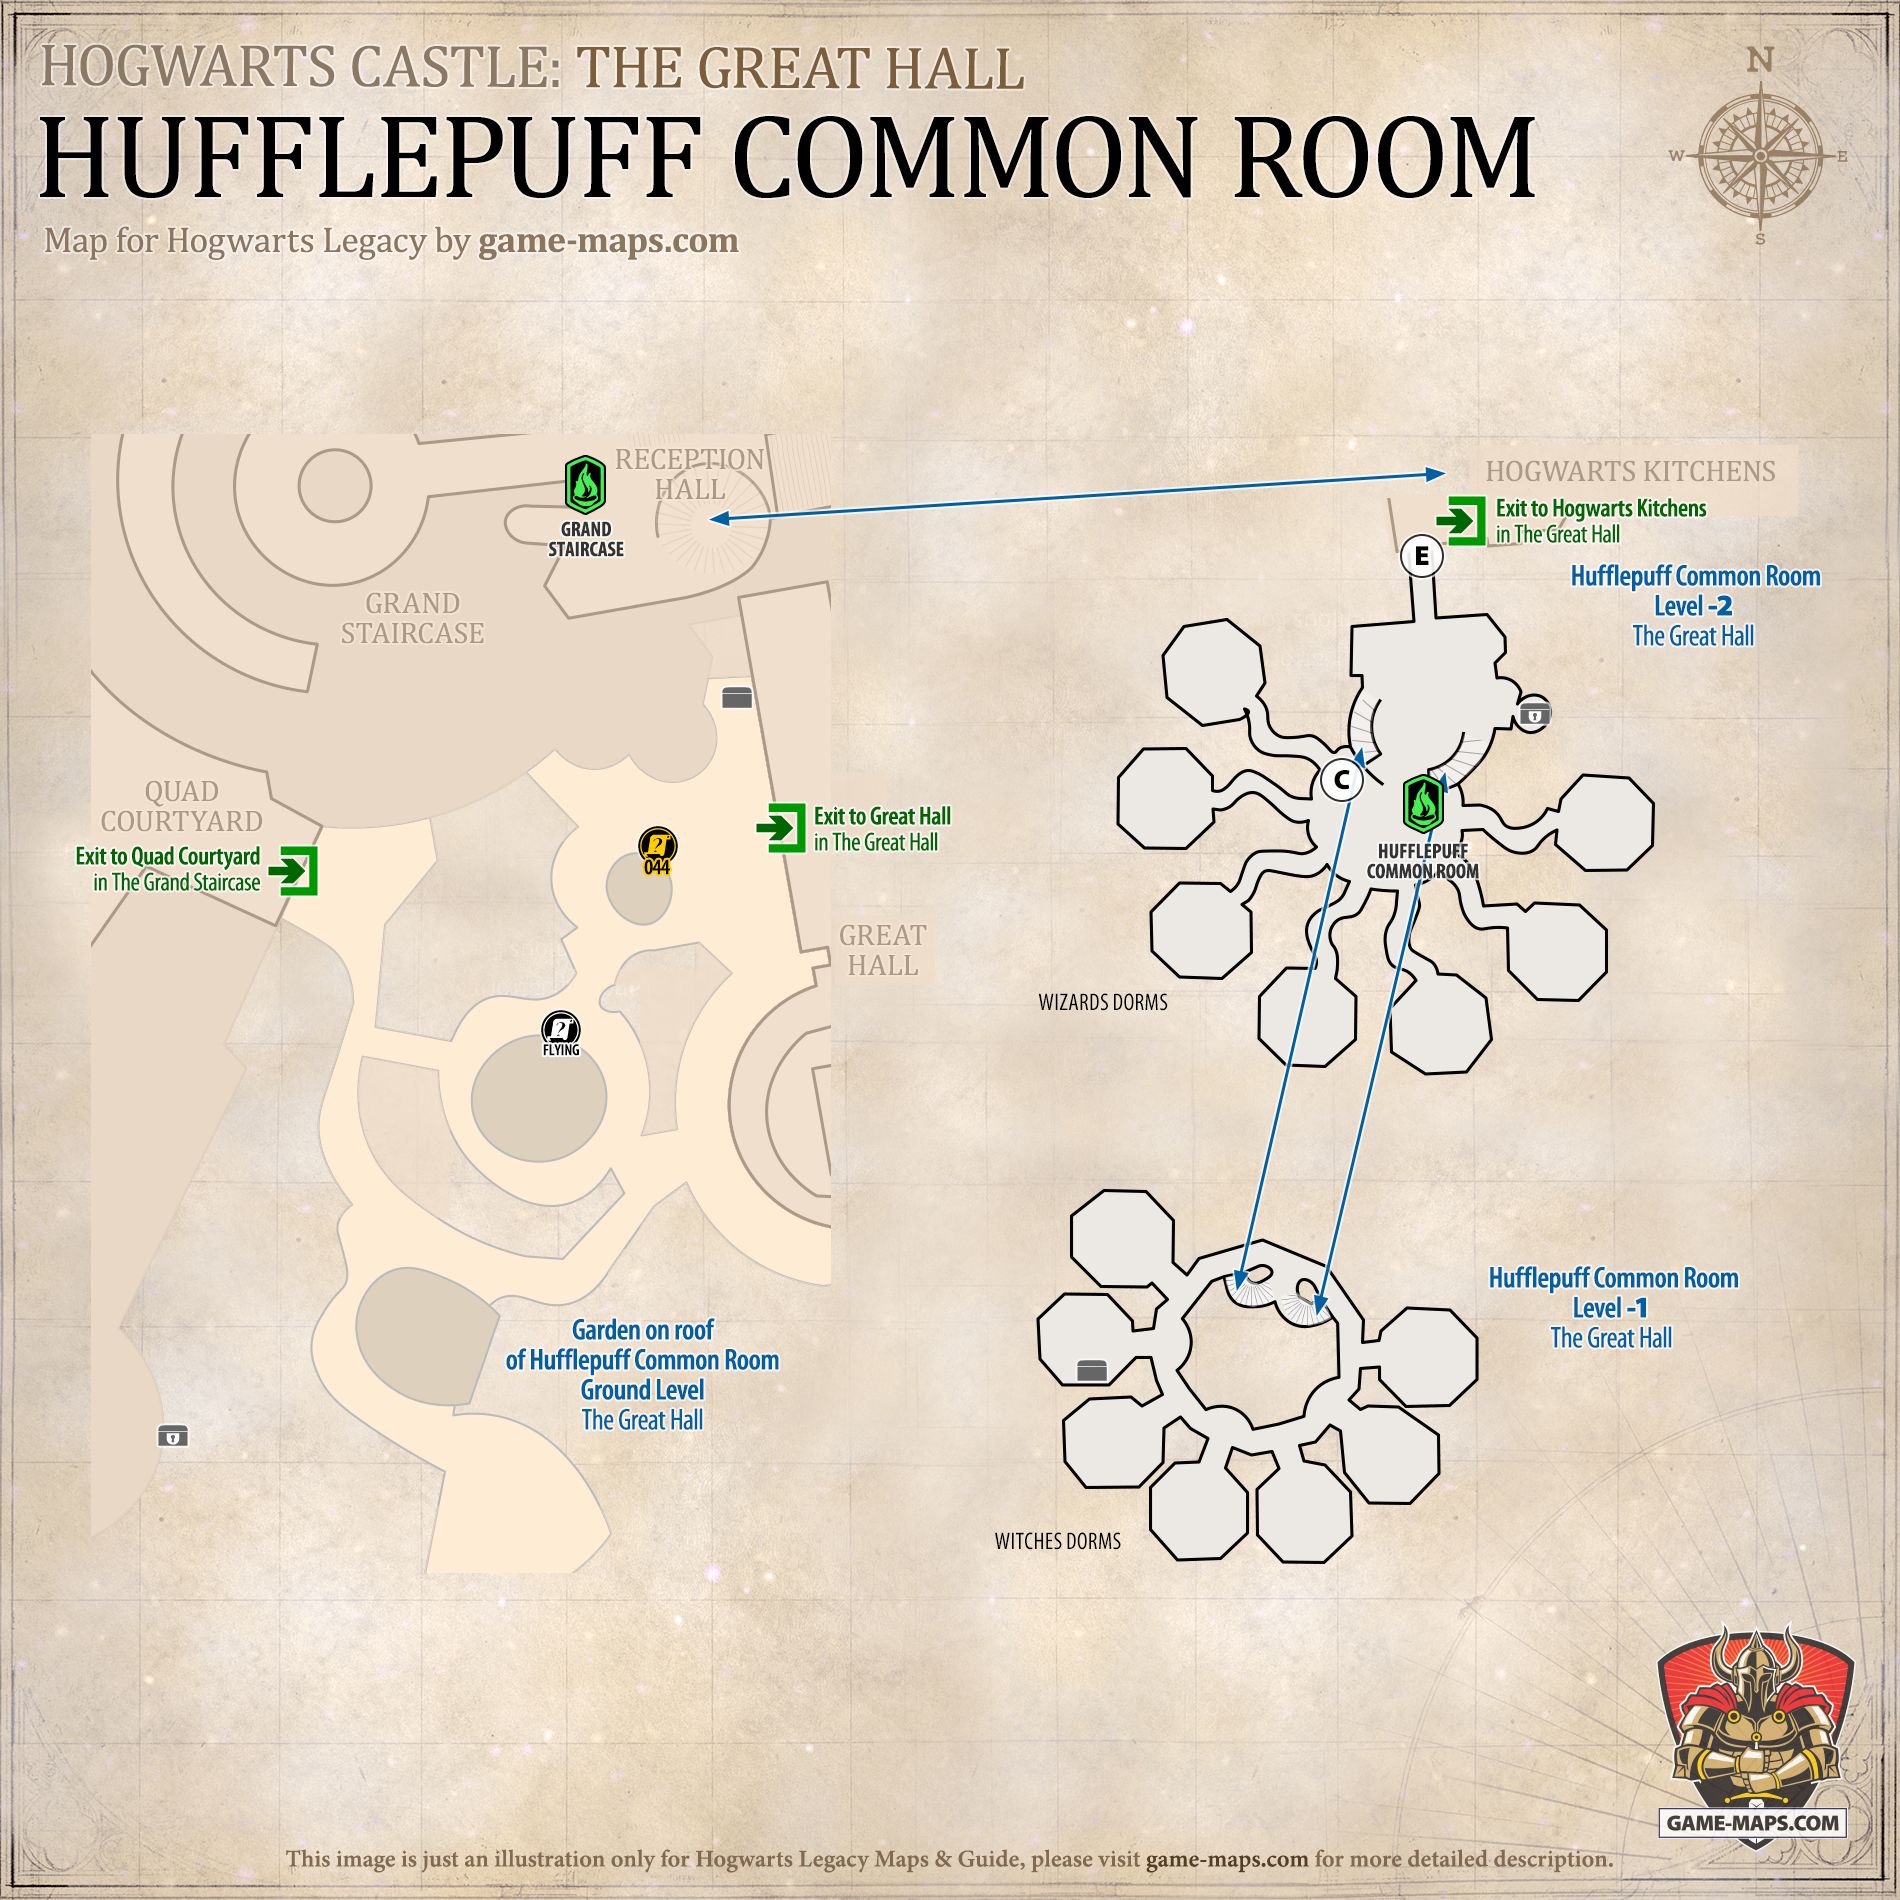 Hufflepuff Commonsoom Mapa pro Bradavice Legacy